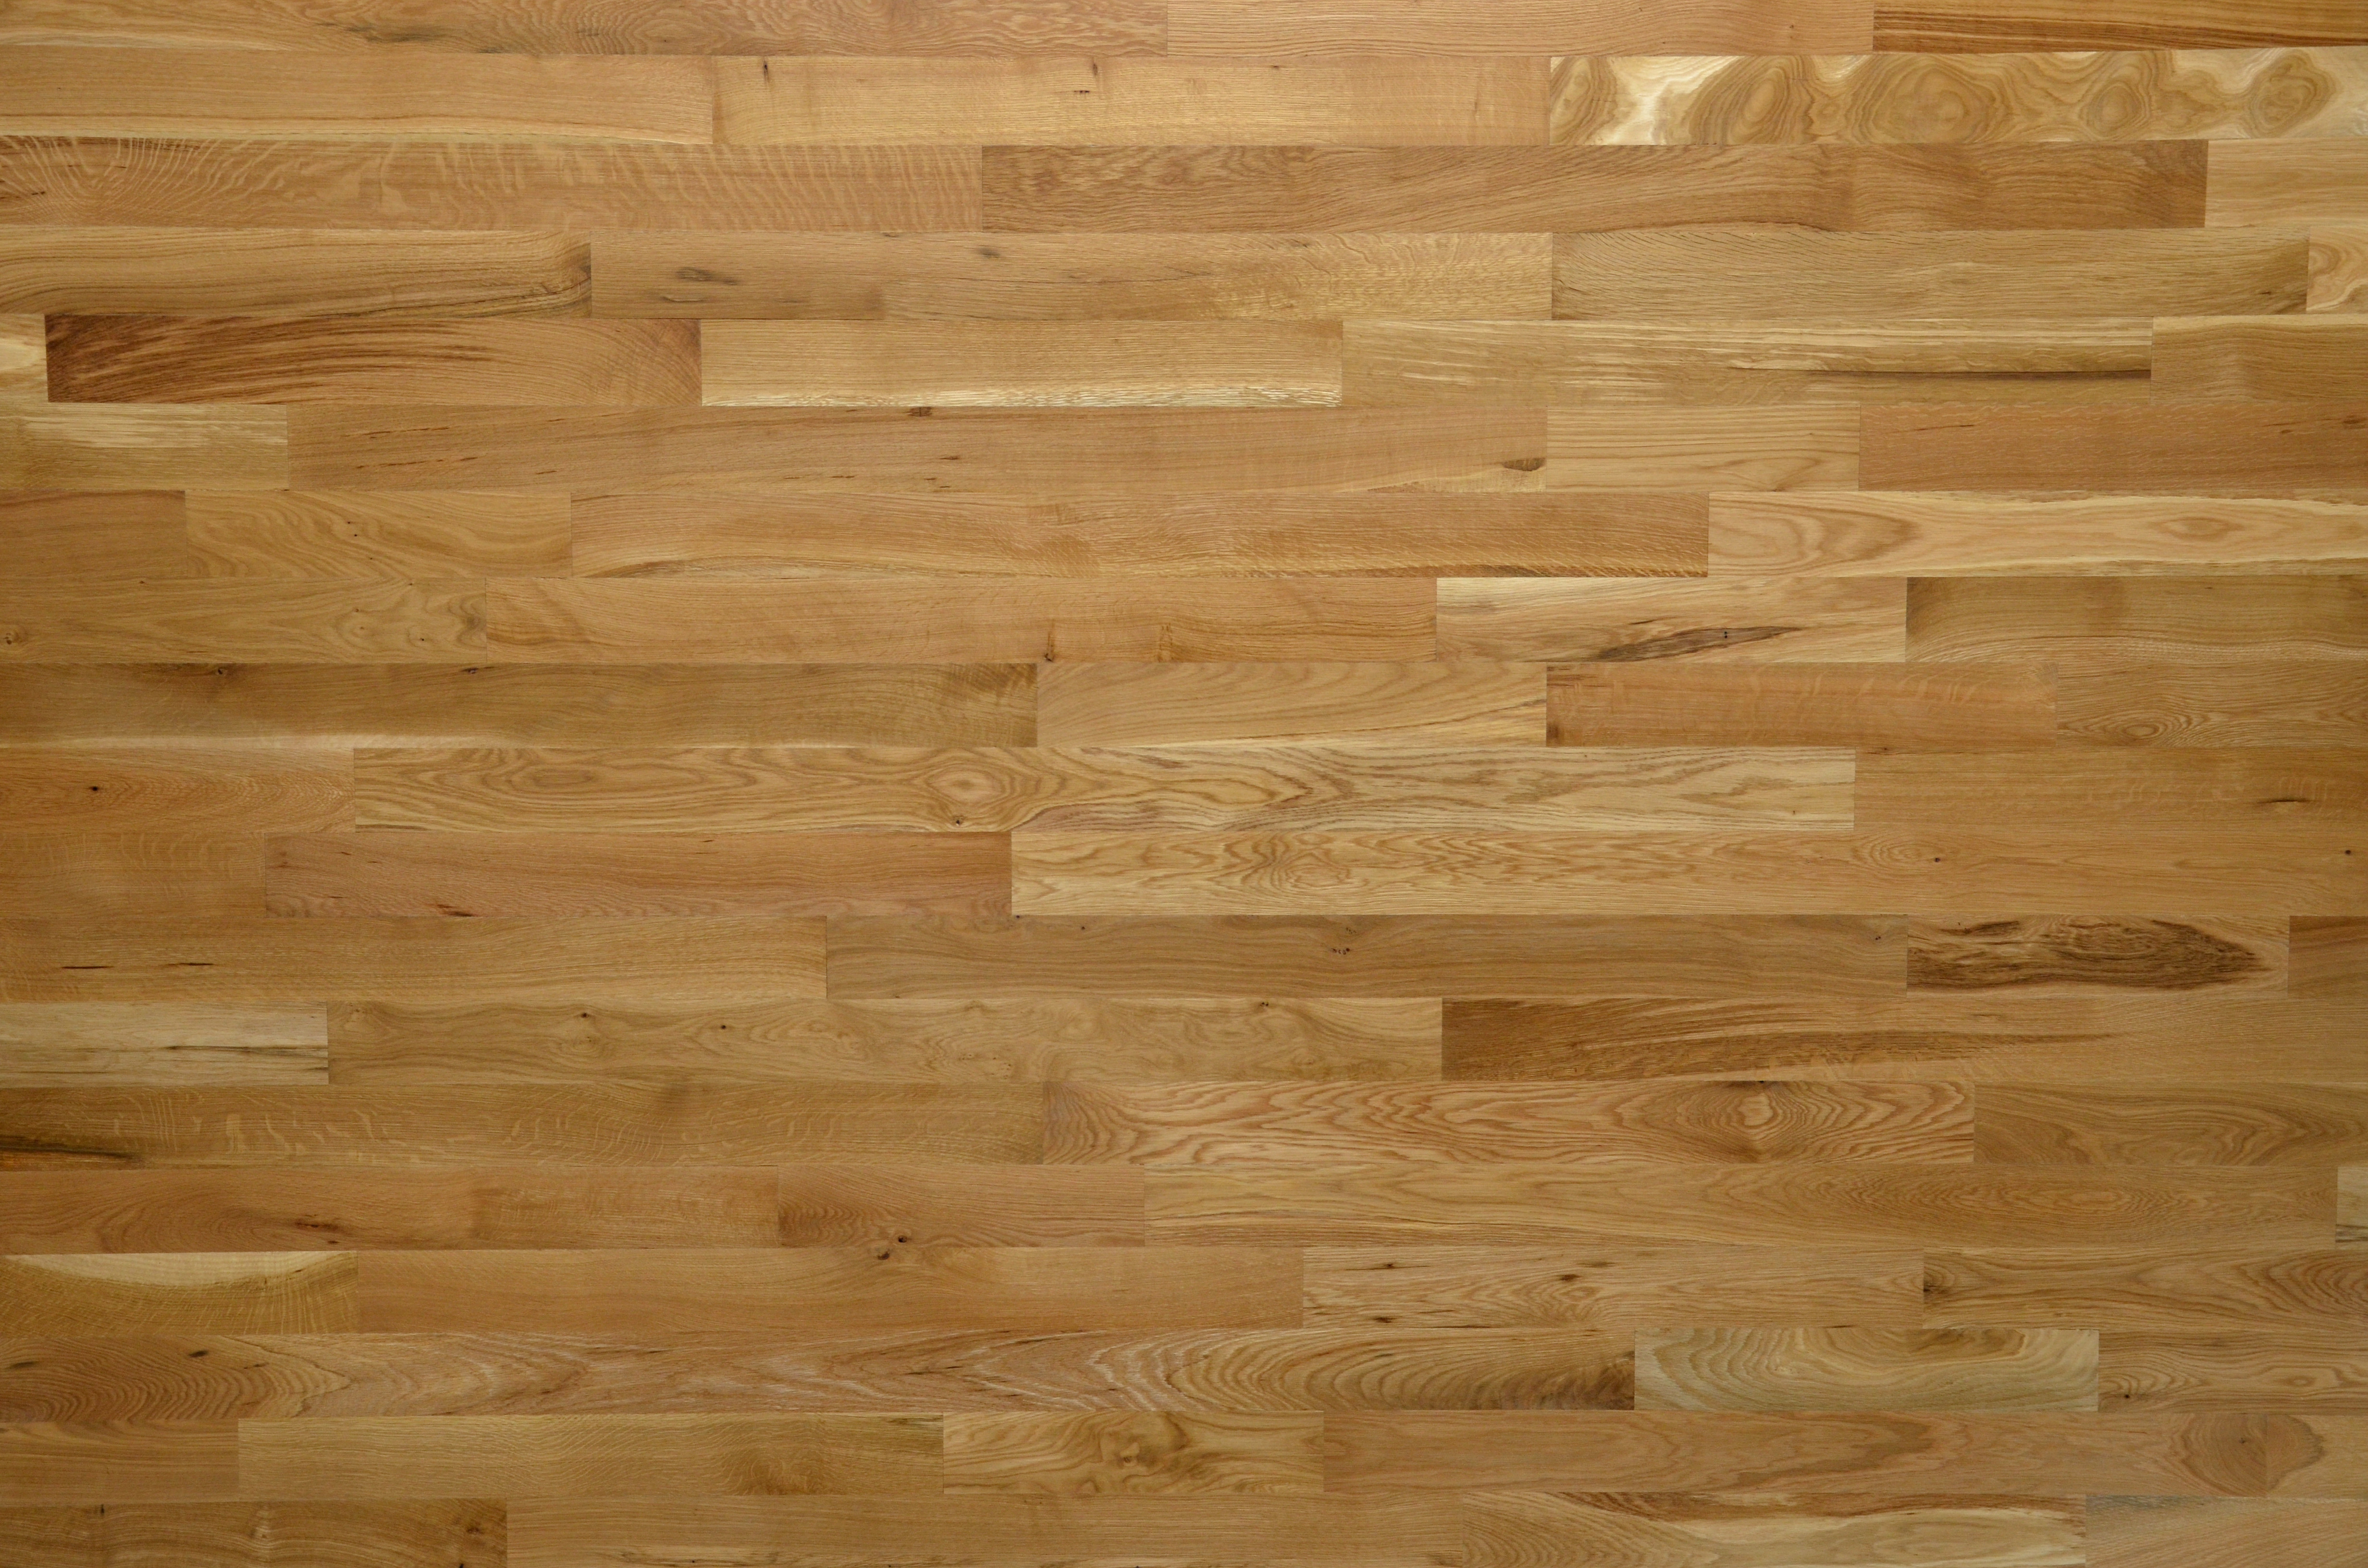 installing 3 4 inch hardwood flooring of lacrosse hardwood flooring walnut white oak red oak hickory regarding 1 common white oak